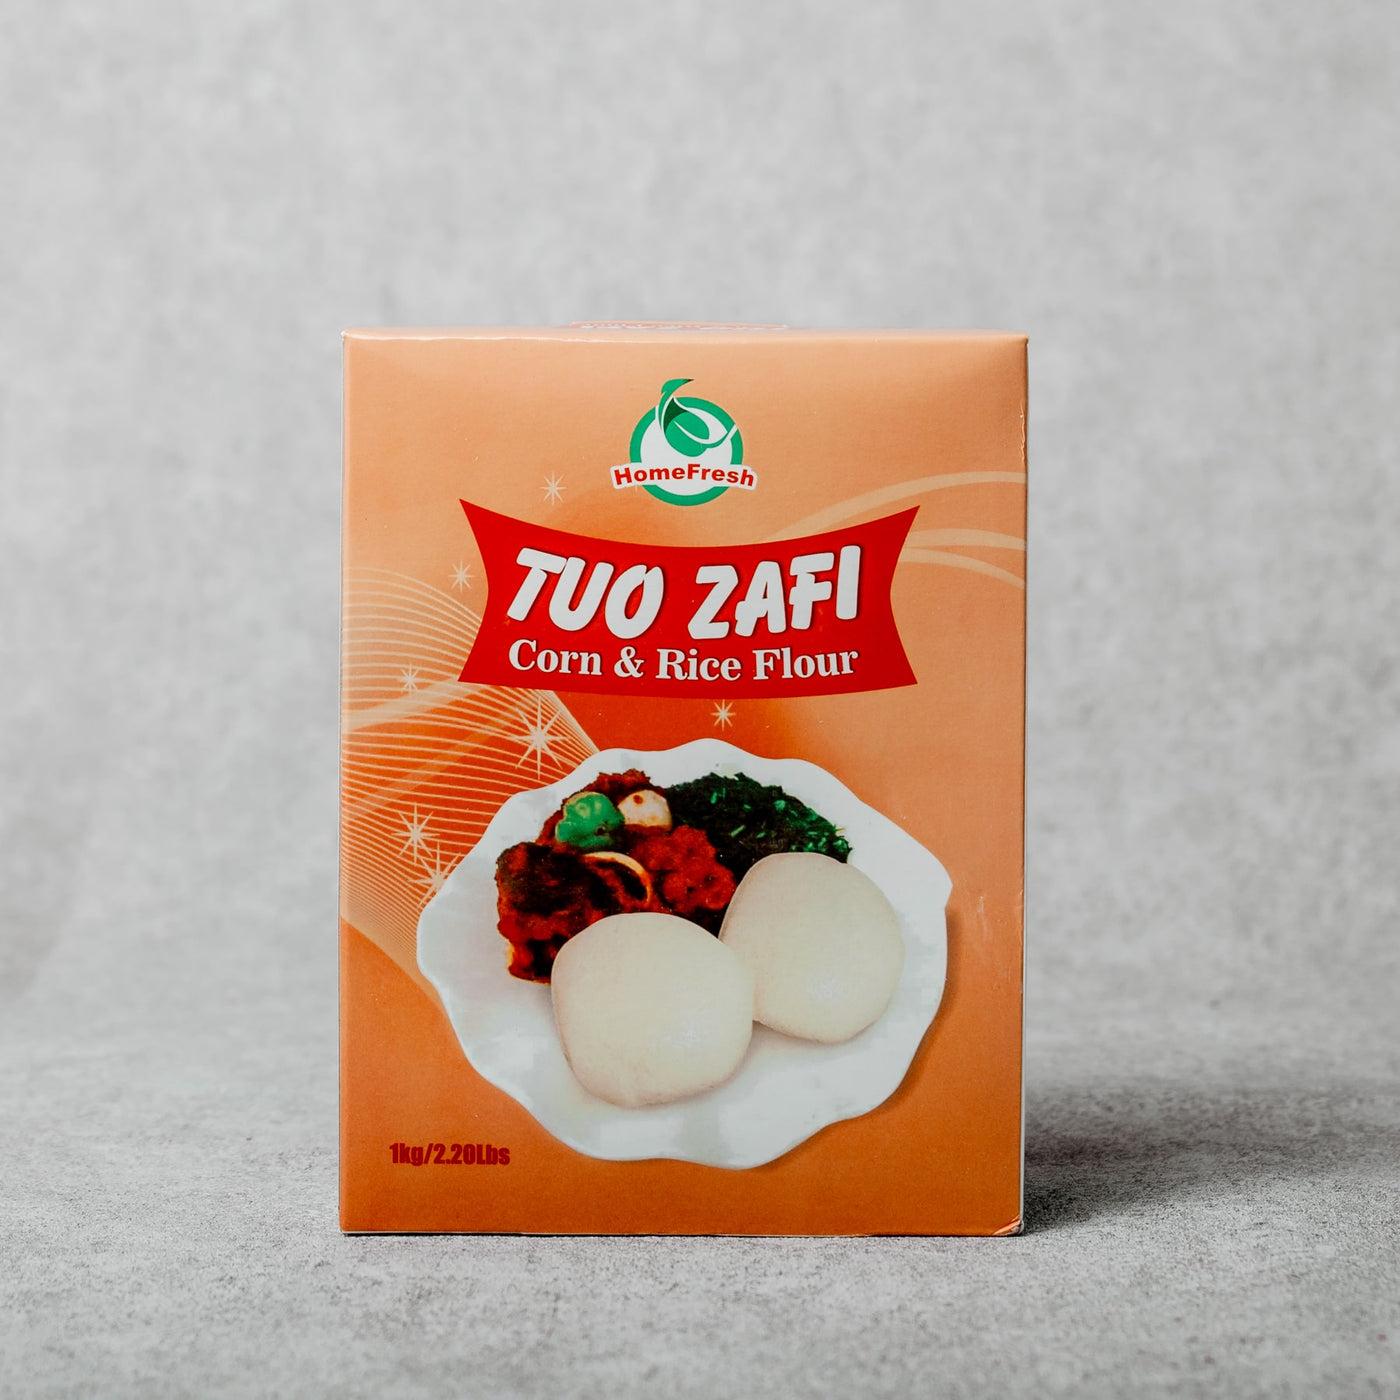 Home Fresh - Tuo Zafi (Corn & Rice Flour)